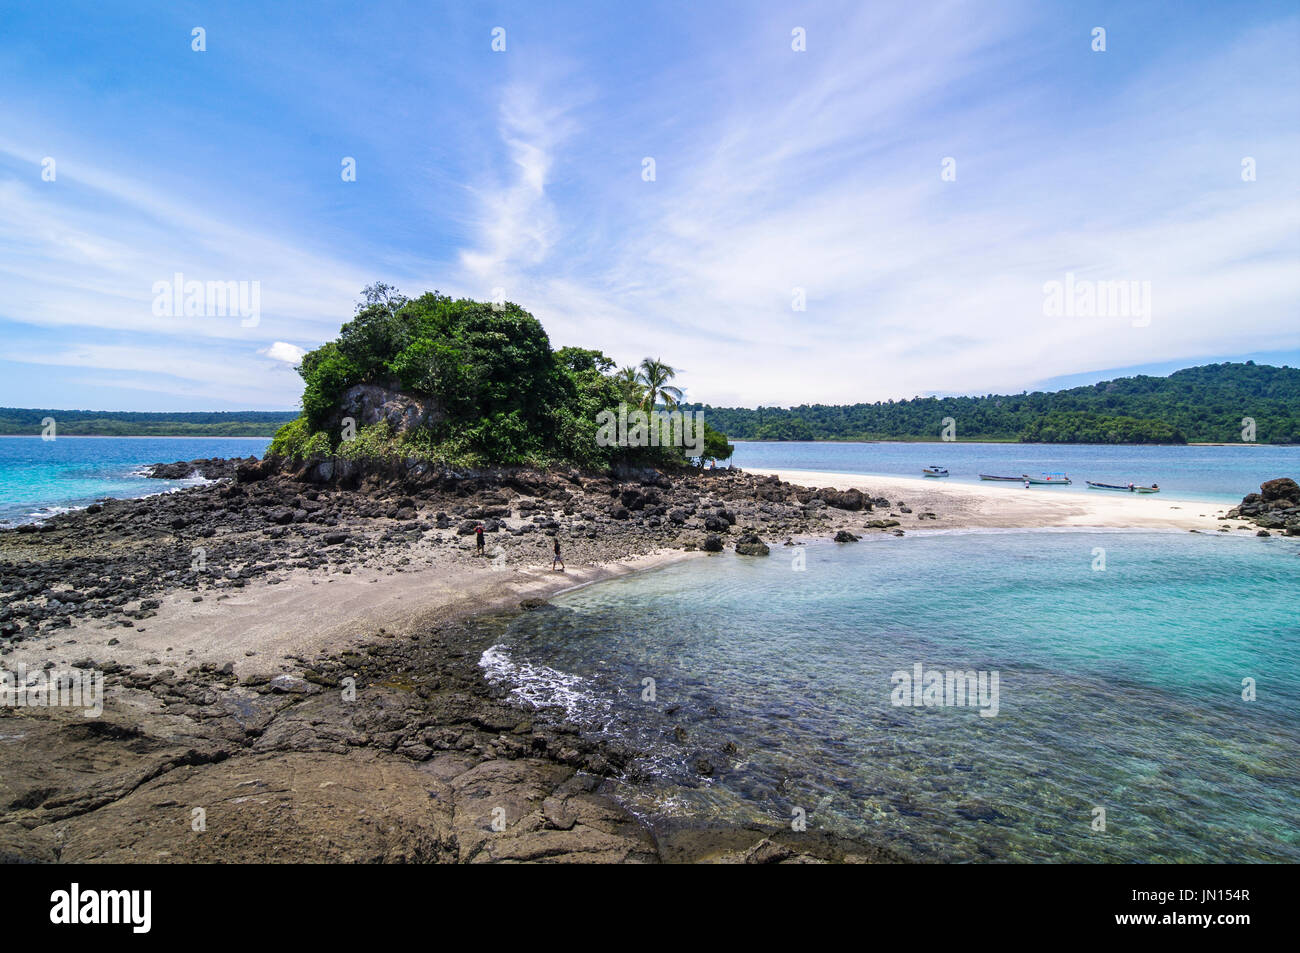 Beach scenes from coiba island national nature park in Panama Stock Photo